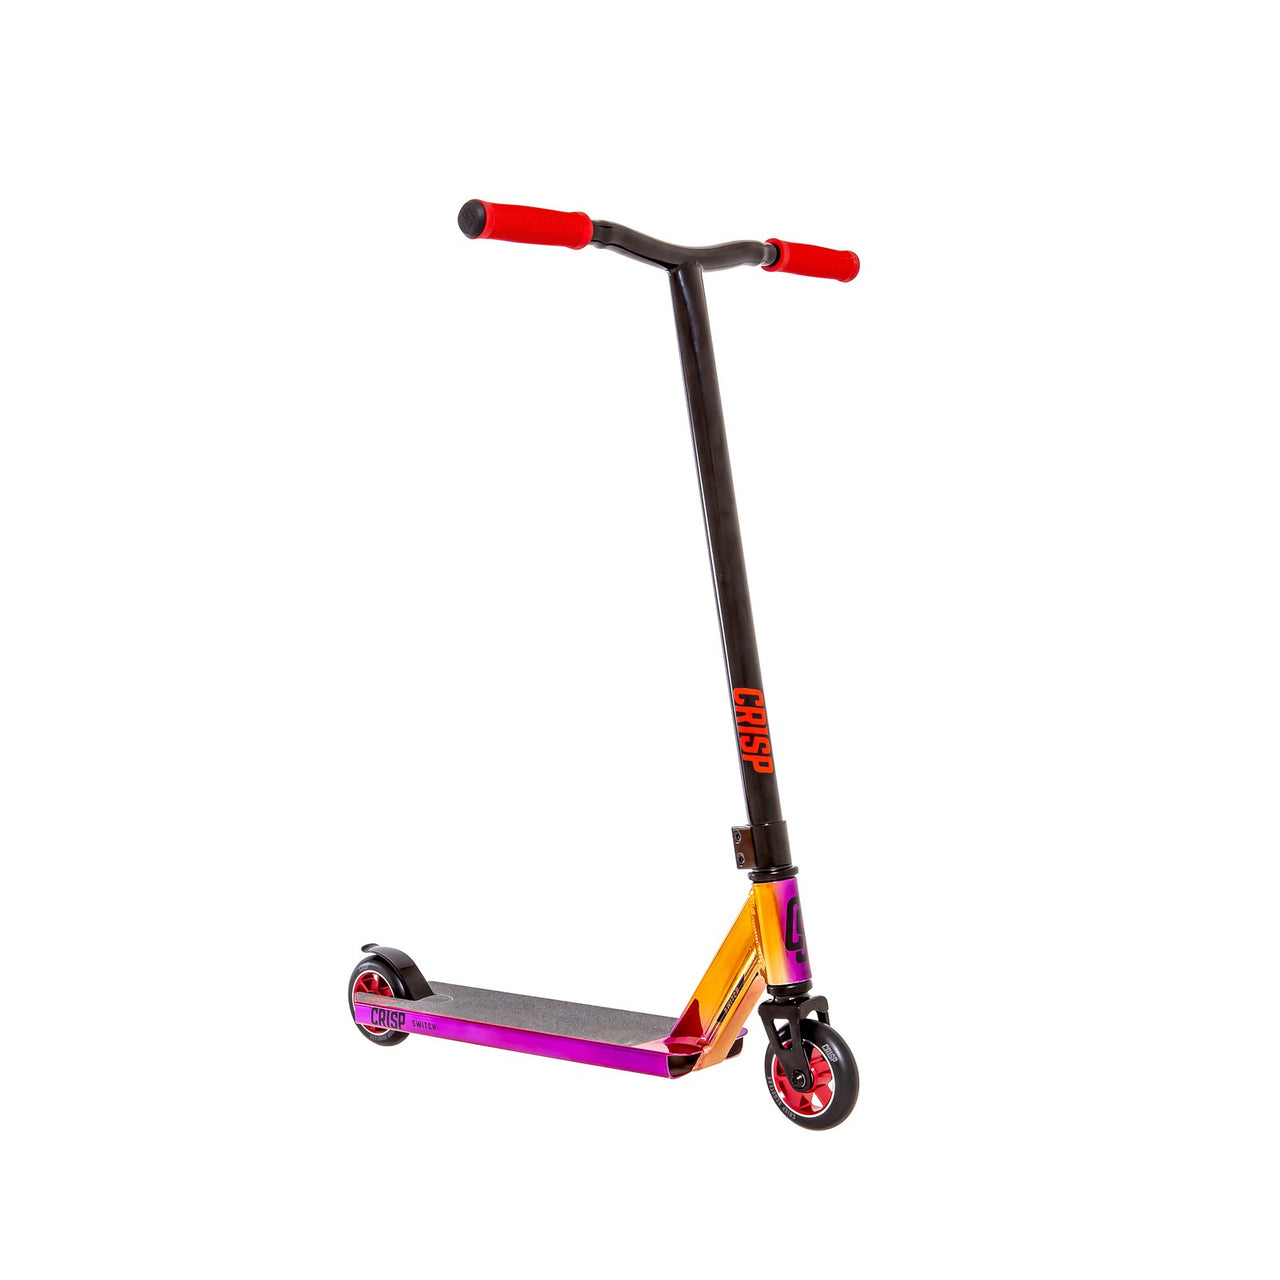 Crisp Switch Scooter Chrome/purple/orange/red [col:chrome/multi]